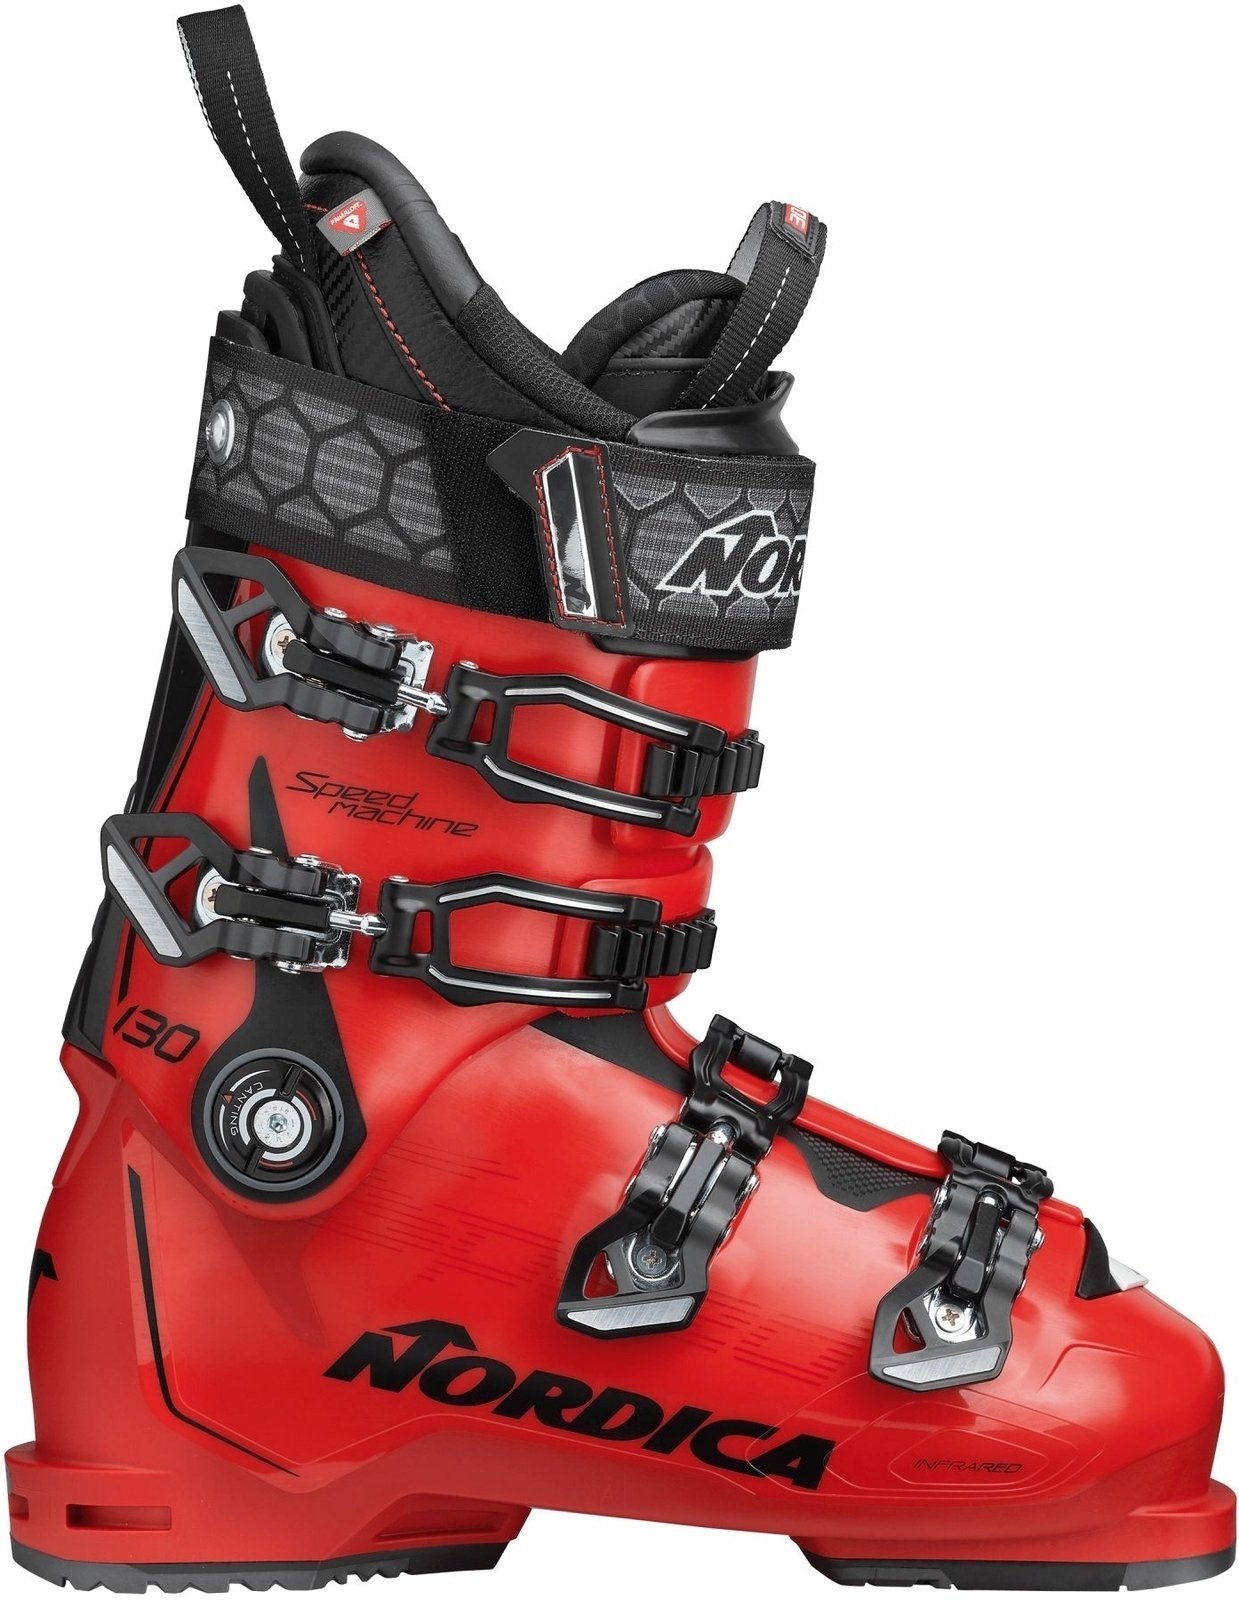 Chaussures de ski alpin Nordica Speedmachine Rouge-Noir 290 Chaussures de ski alpin